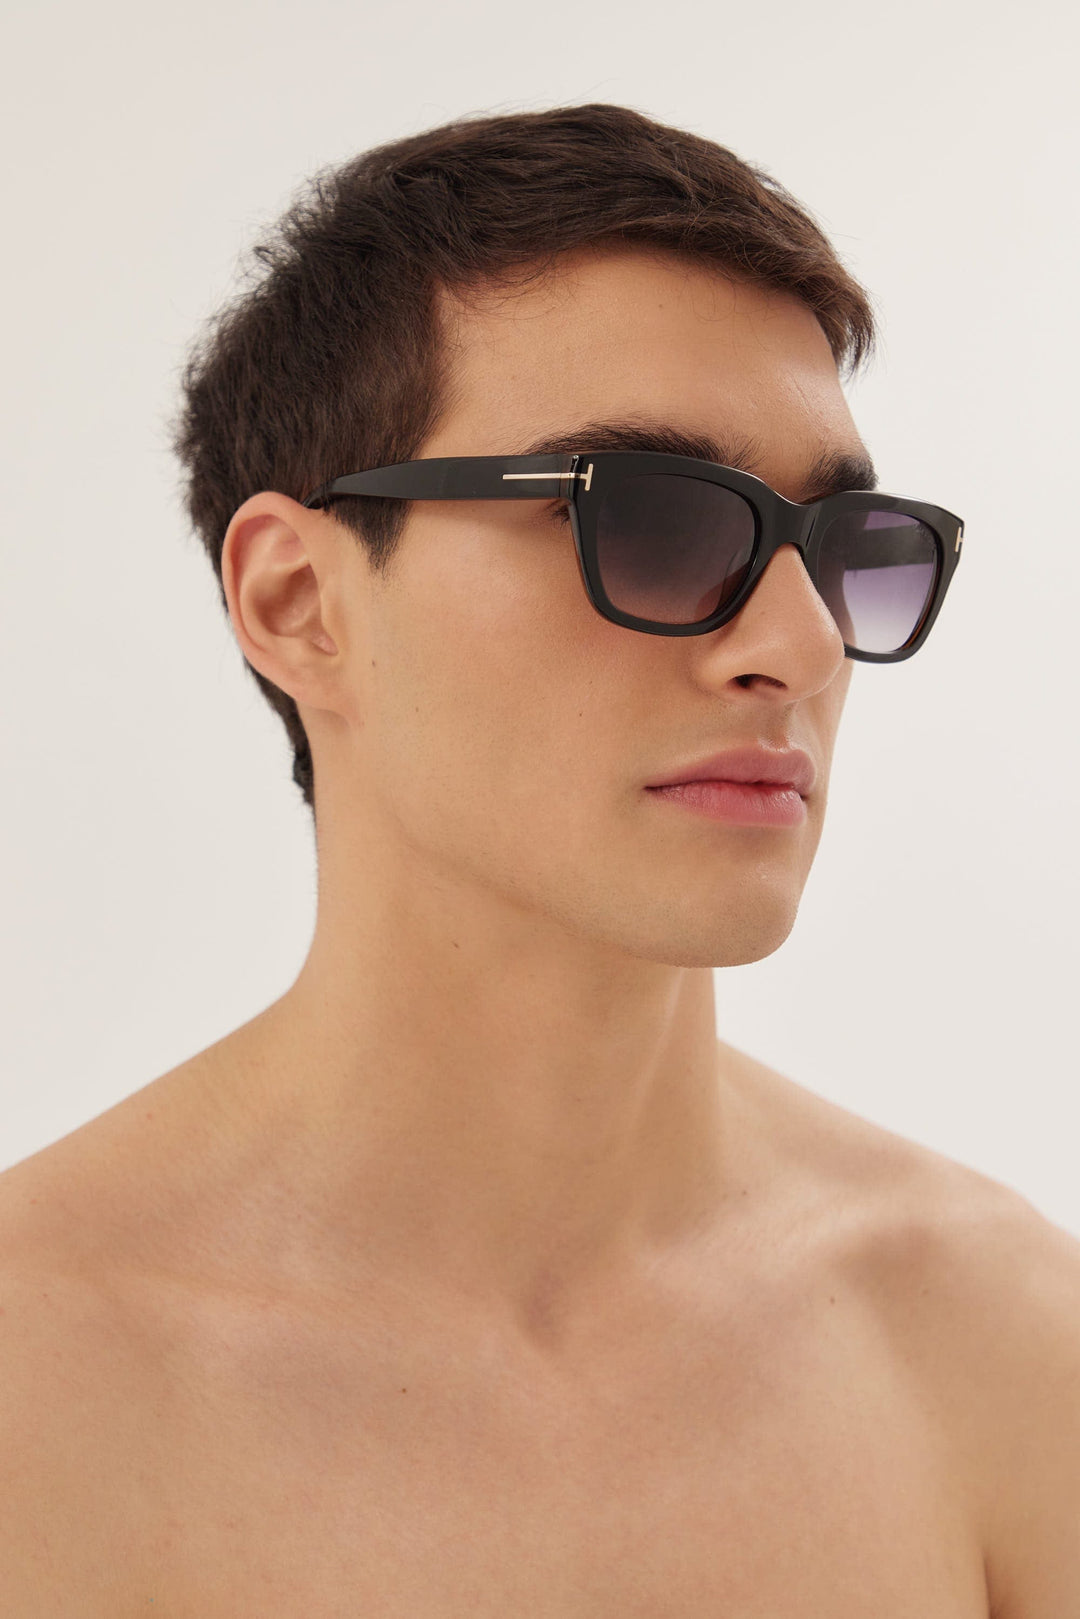 Tom Ford classic black sunglasses - Eyewear Club